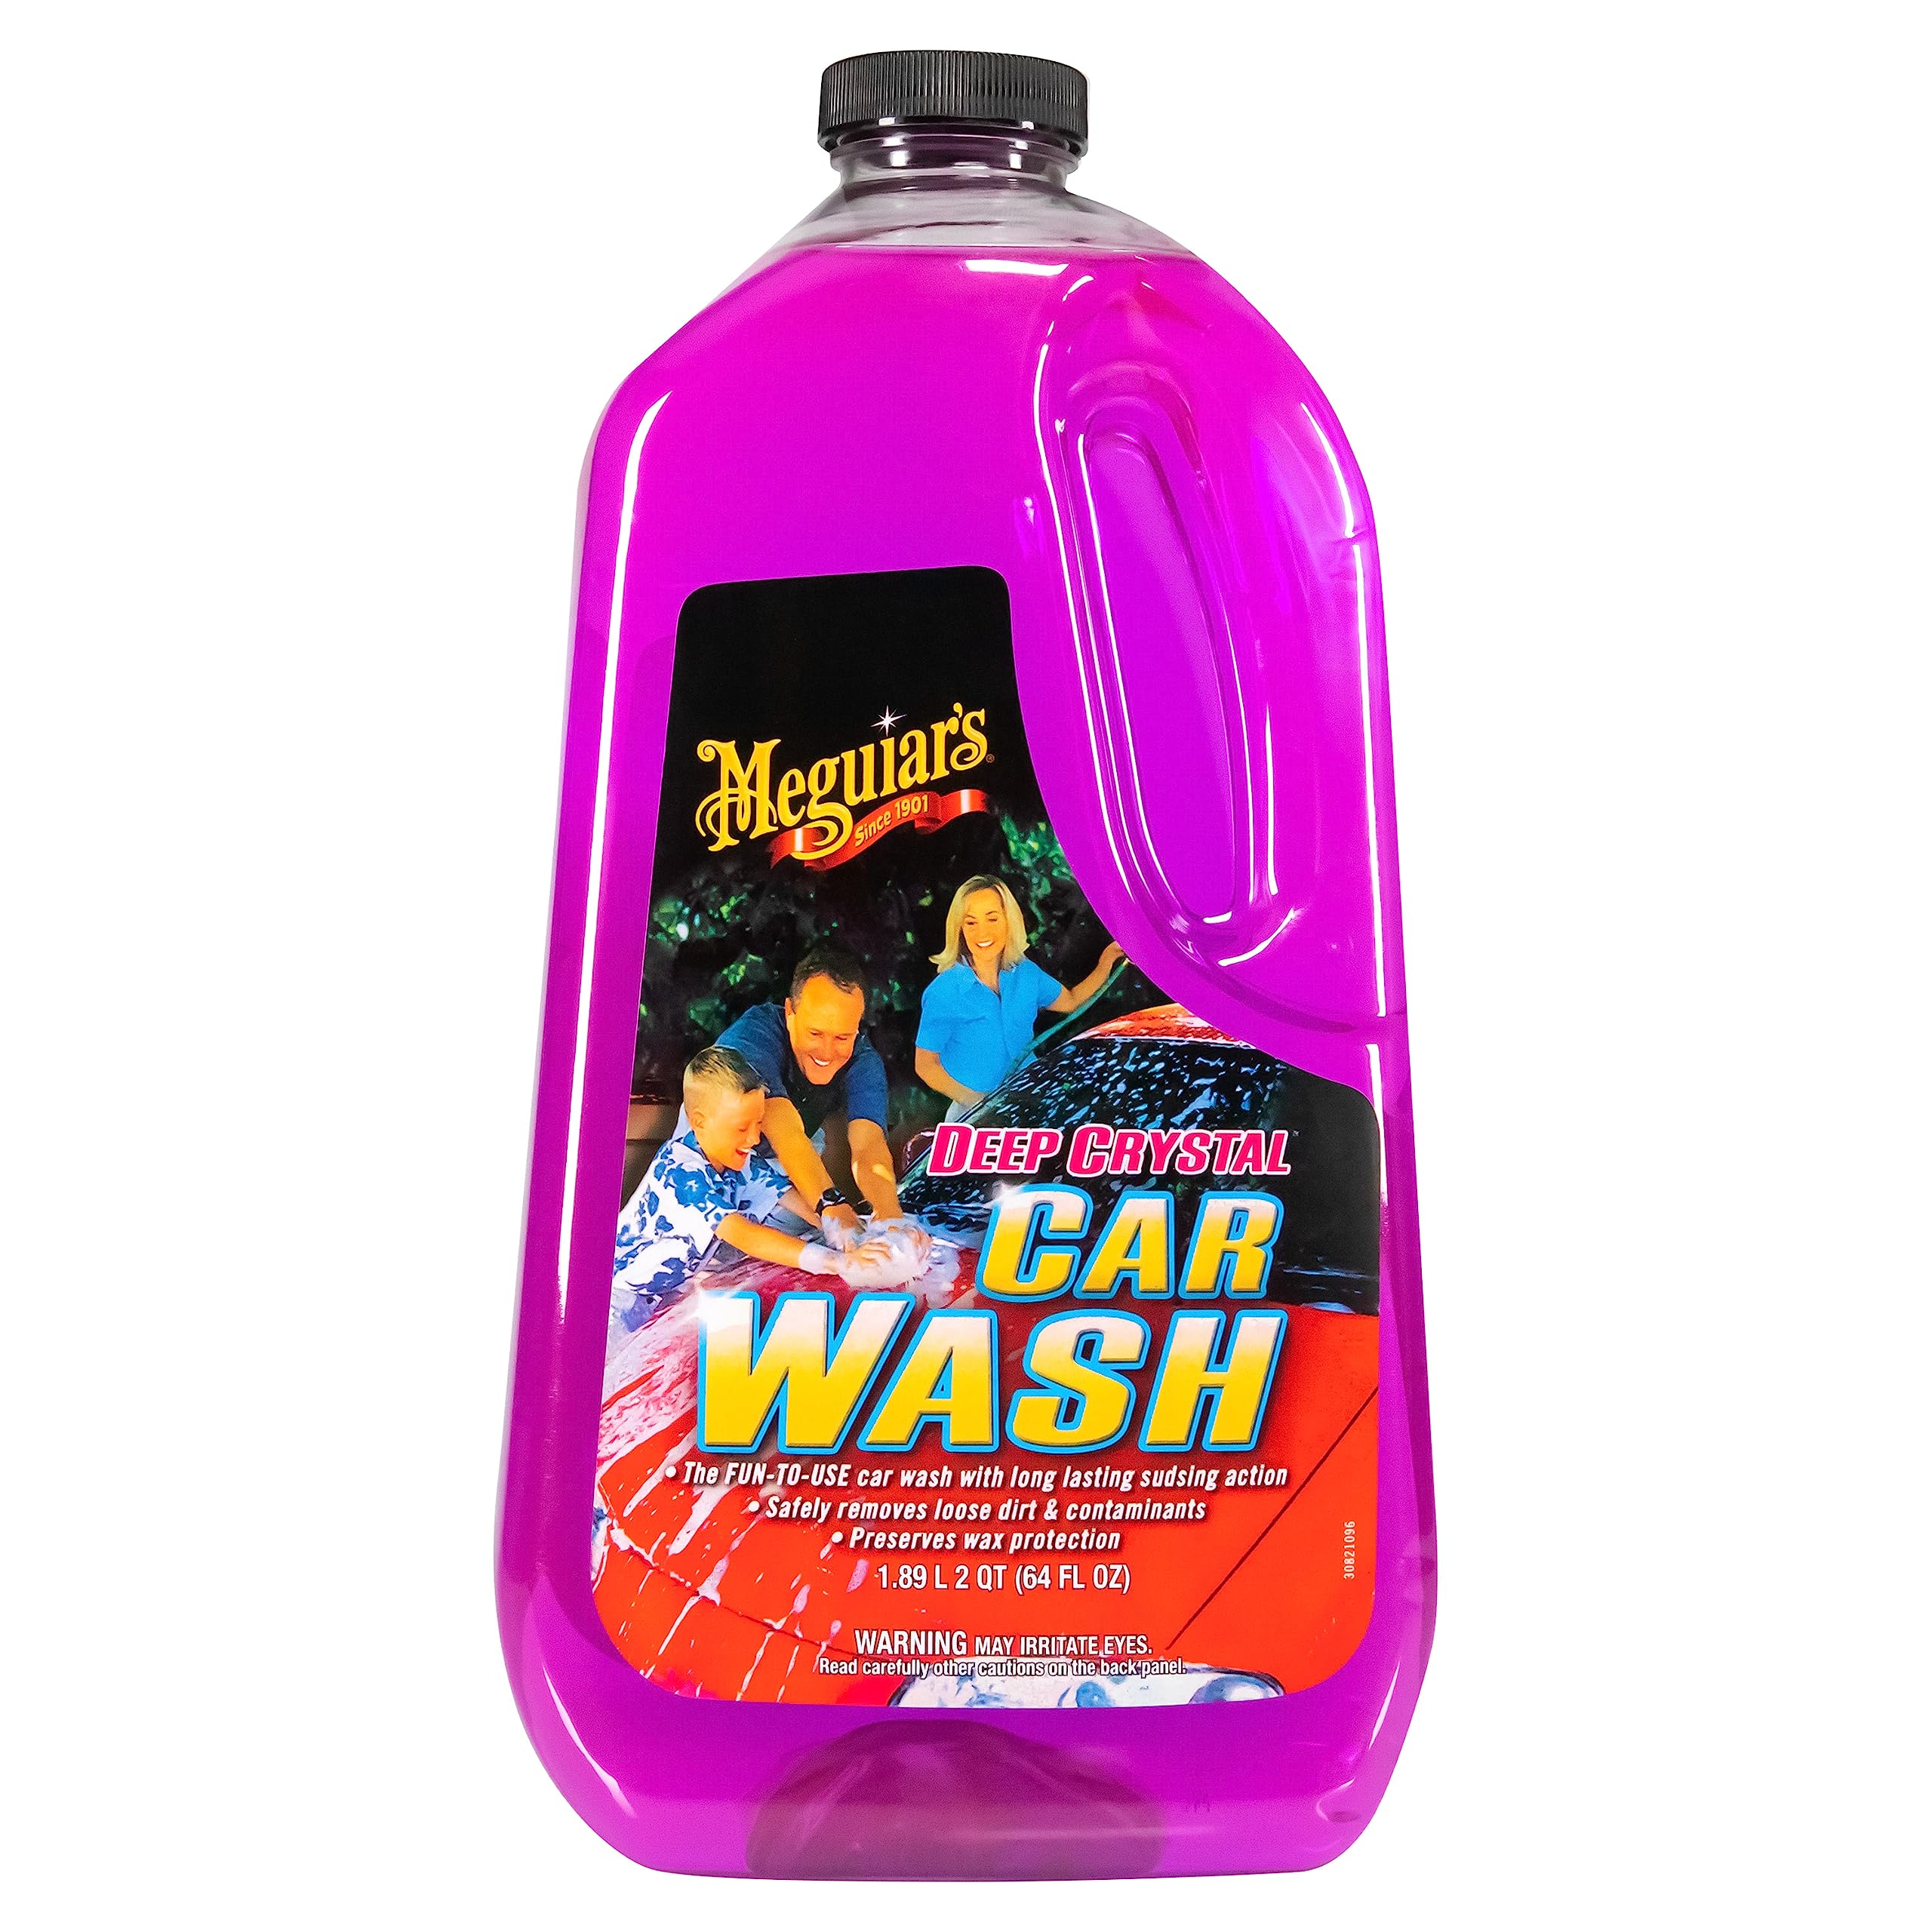 64-Oz Meguiar's Deep Crystal Car Wash $4.19 + Free Shipping w/ Prime or on $35+